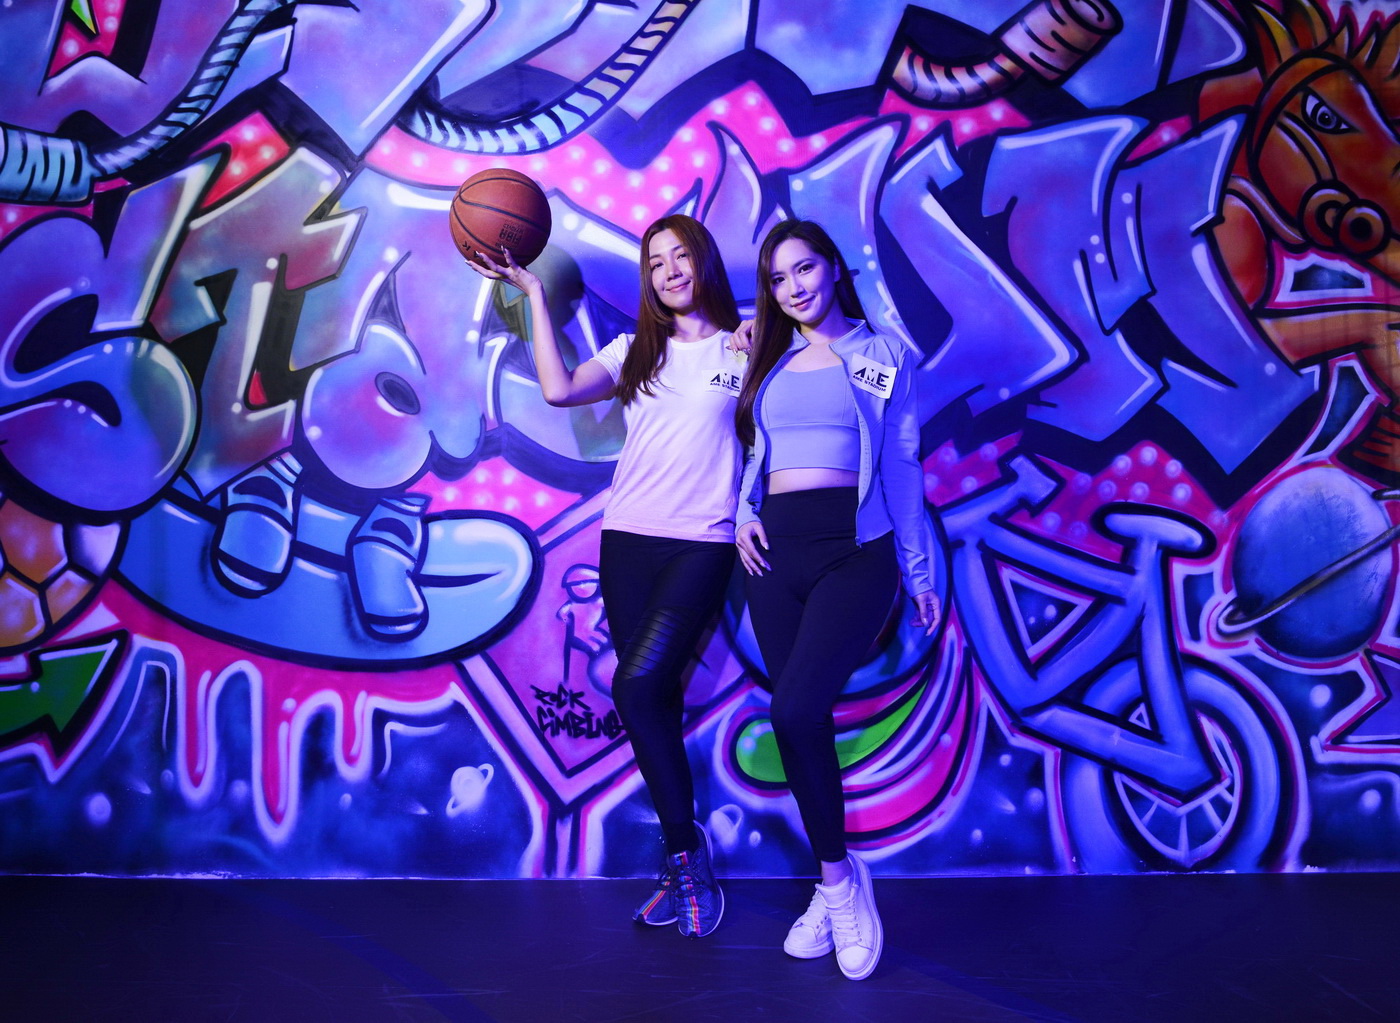 「E-Basketball」牆身將打造成充滿着外國街頭藝術風格的塗鴉墻.jpg